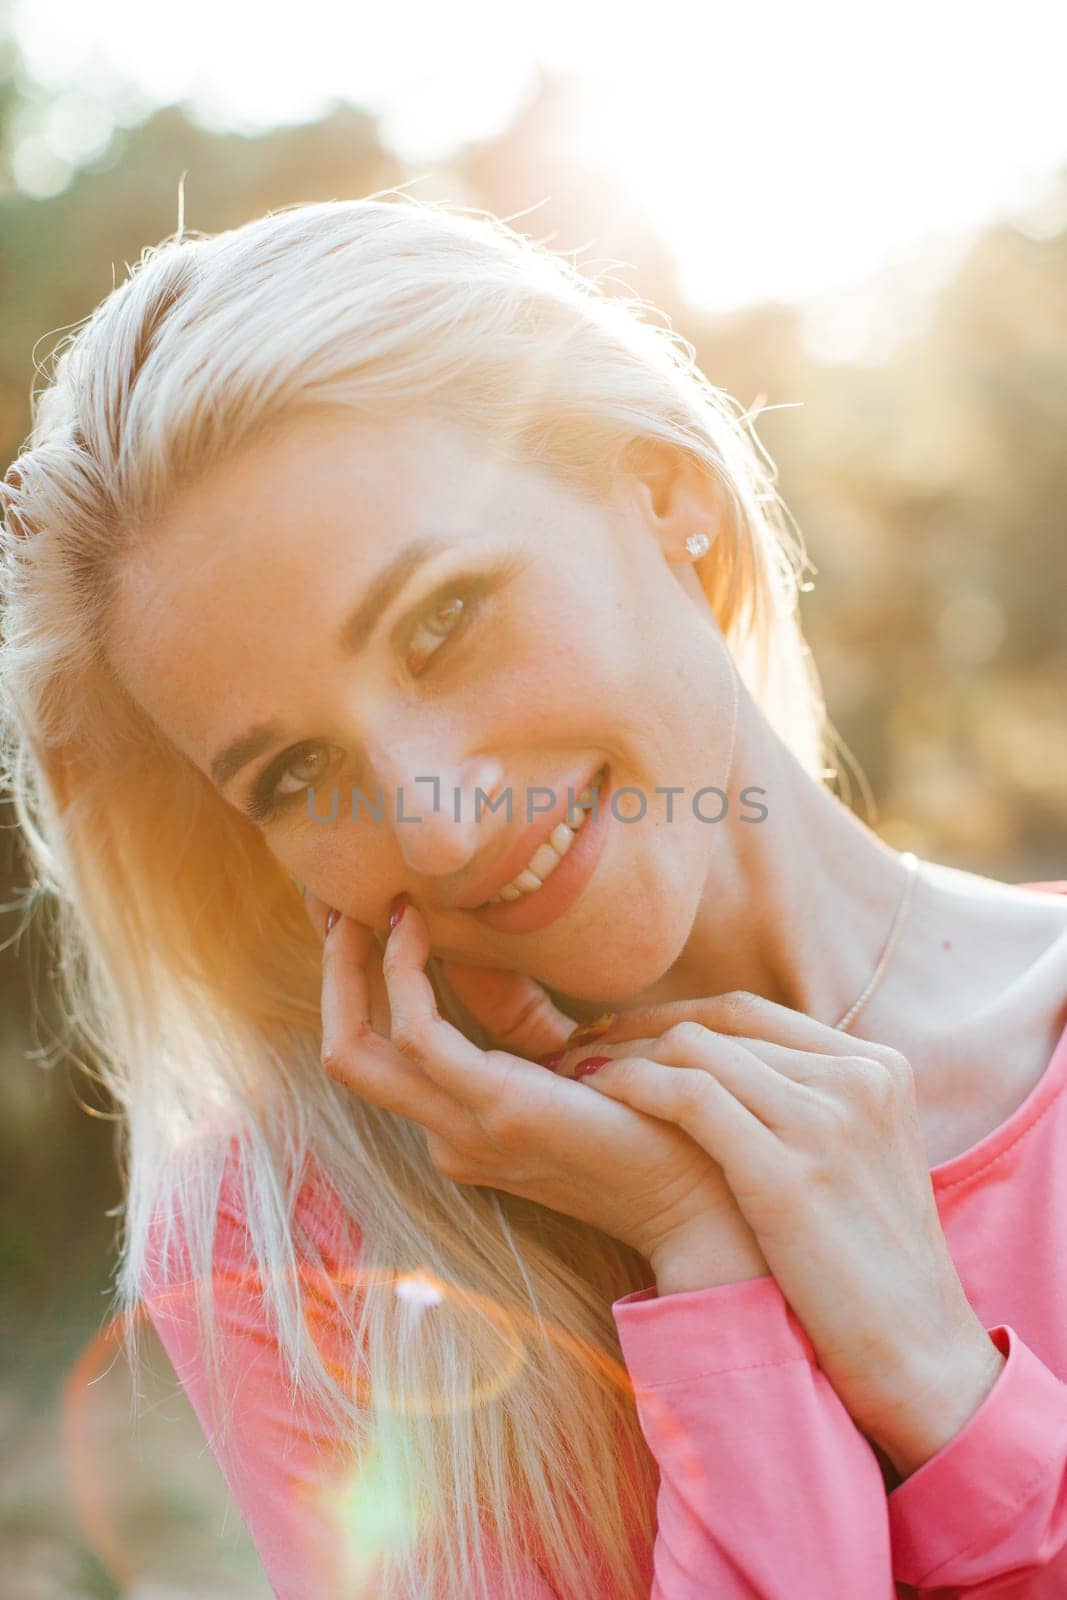 Portrait of beautiful blonde woman in pink dress in park on walk by Simakov